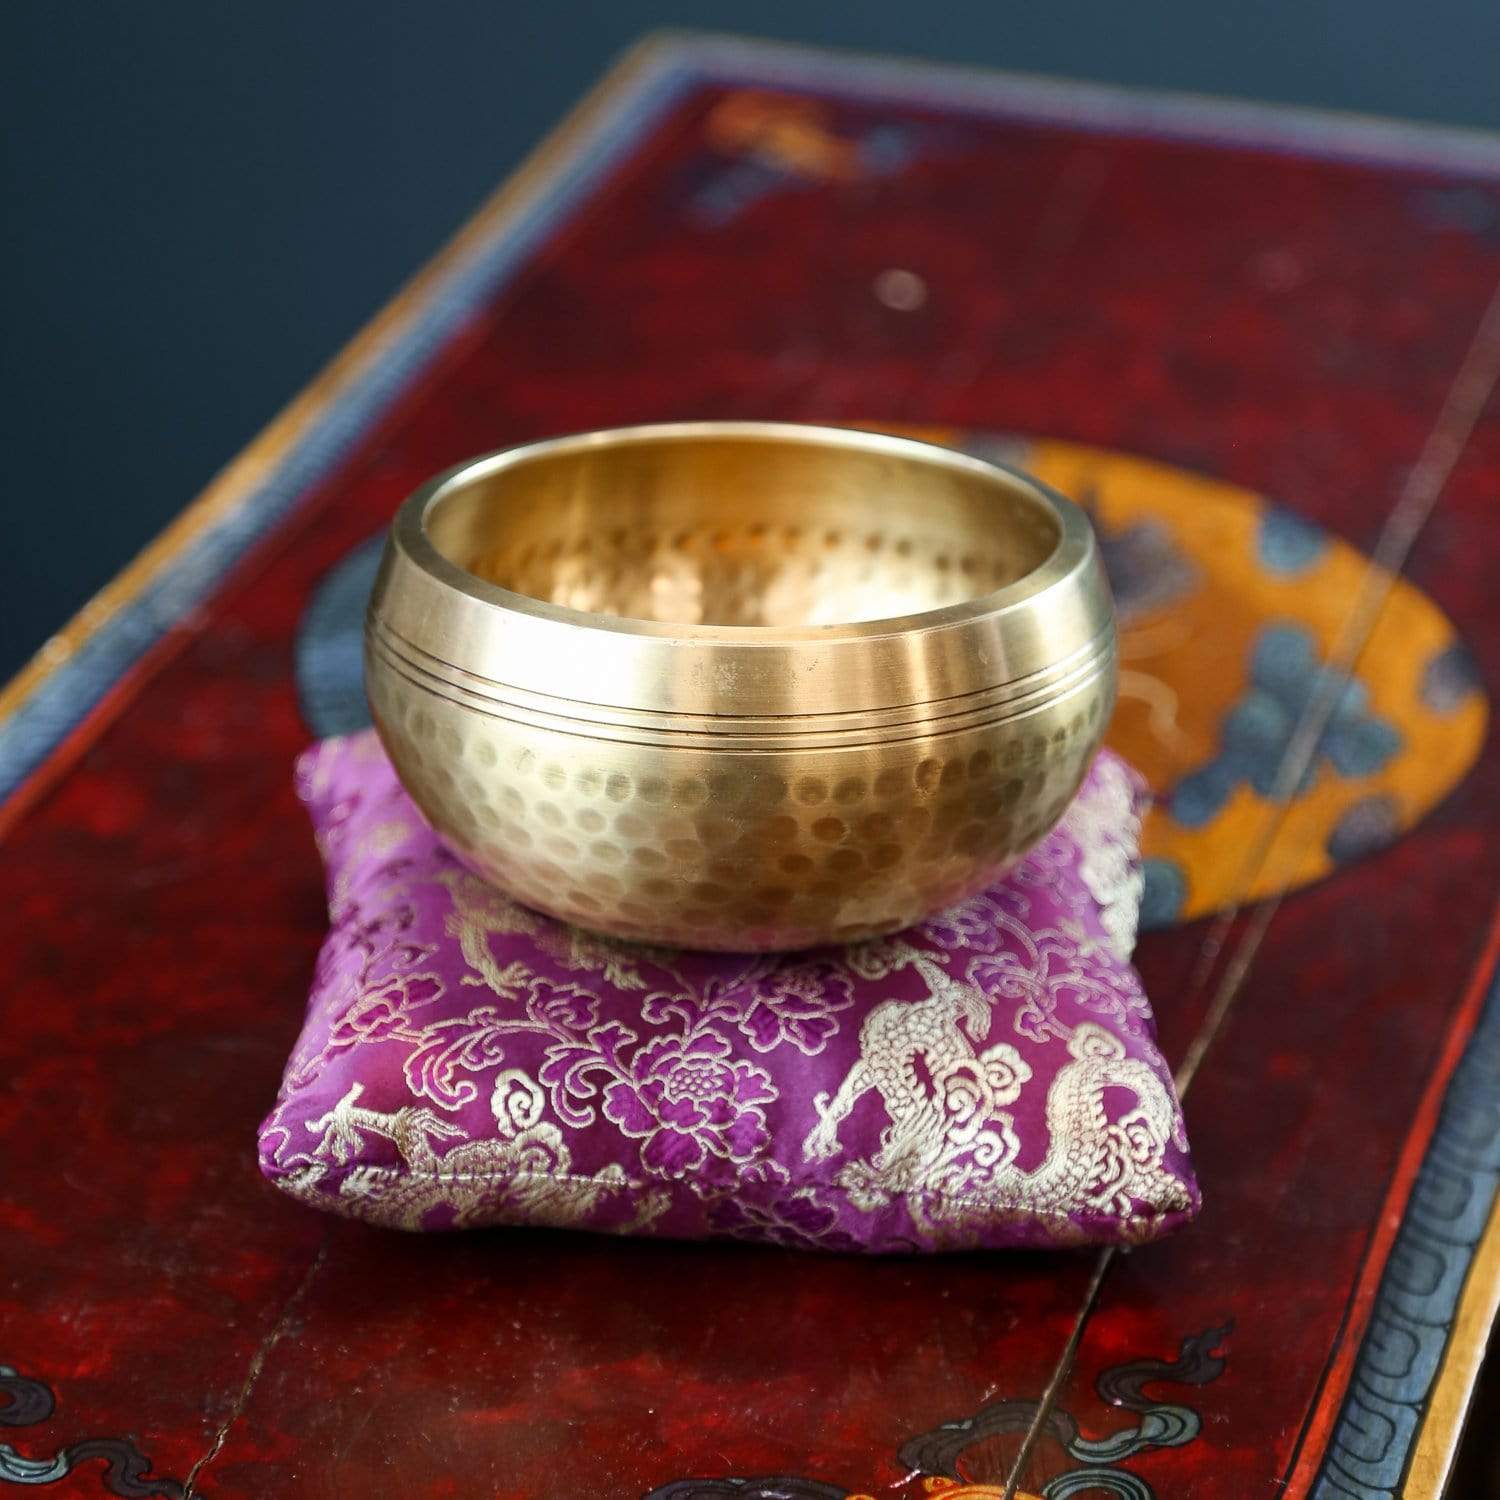 Hand Hammered Copper Bowl - DharmaShop